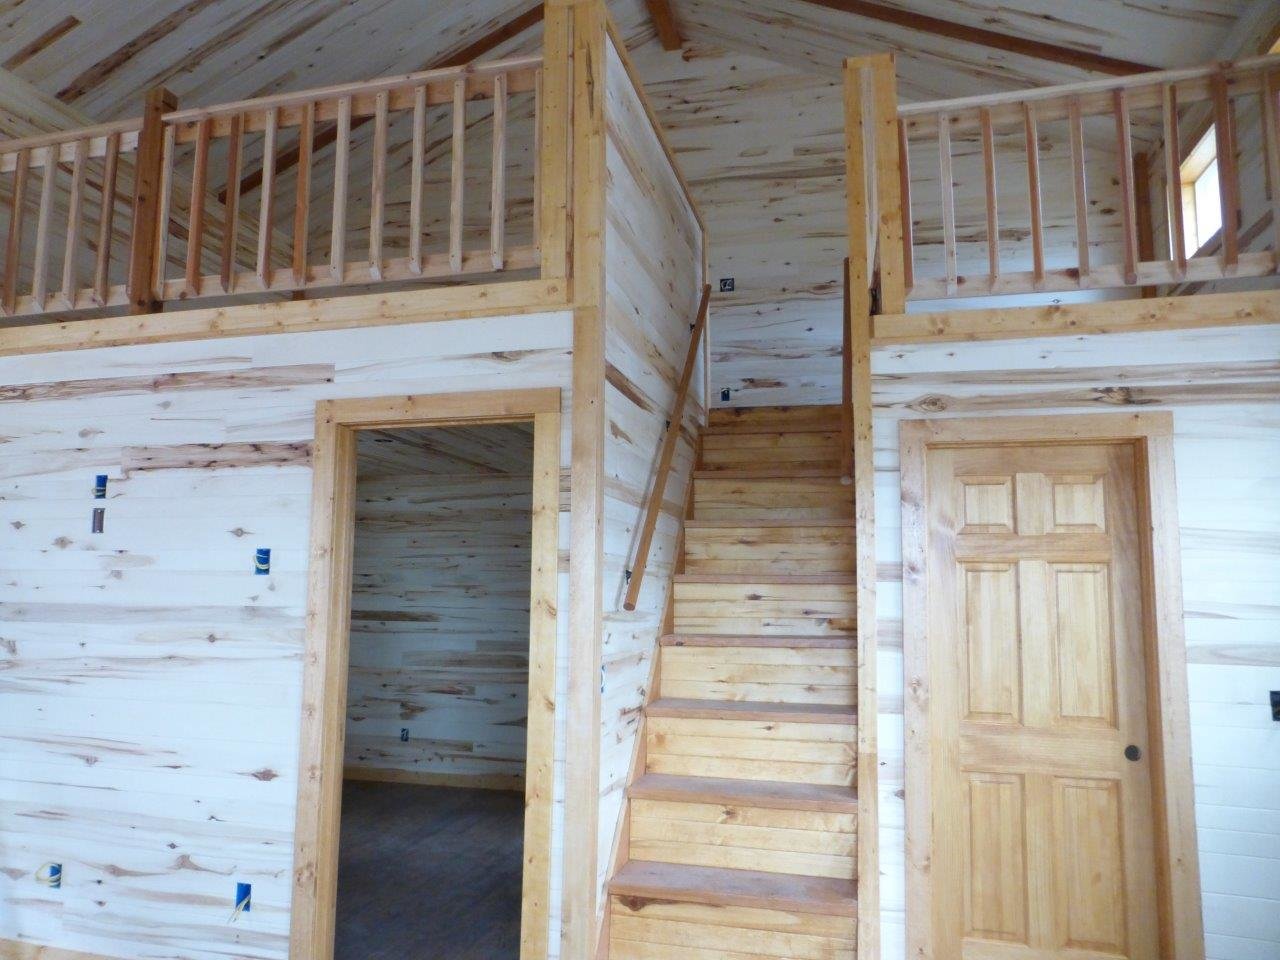 Inside Granite Cabin view of loft (incomplete).